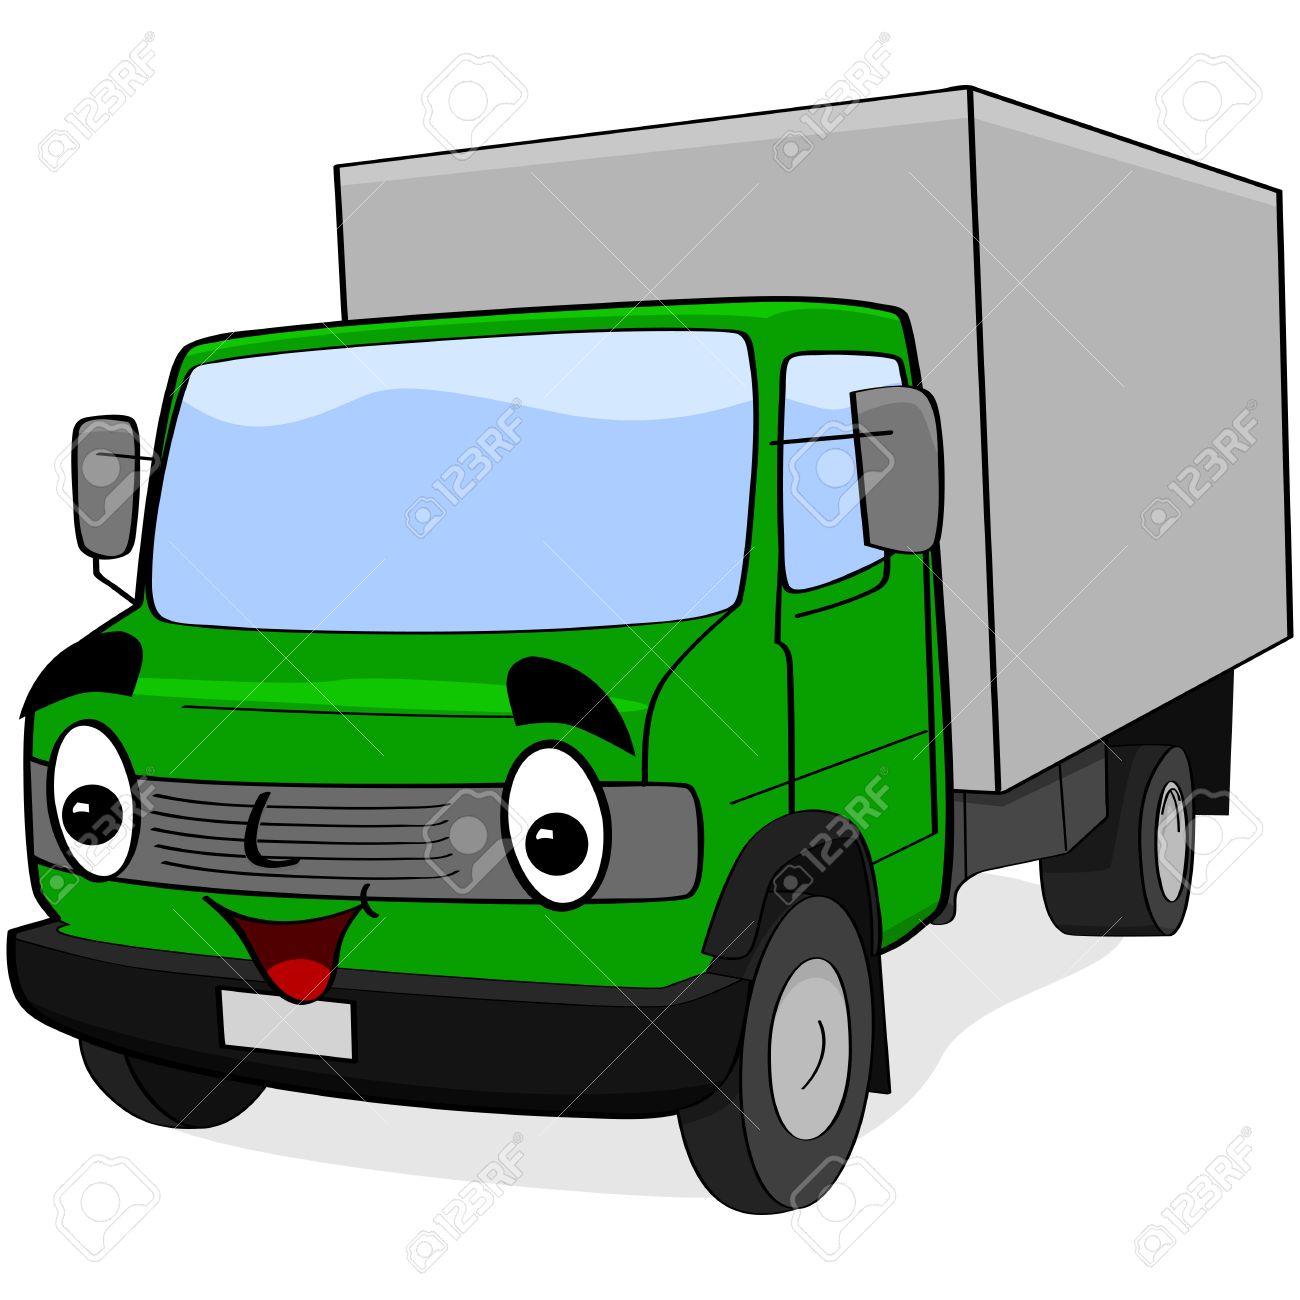 18004961-Cartoon-illustration-showing-a-happy-green-truck-Stock-Vector-truck.jpg